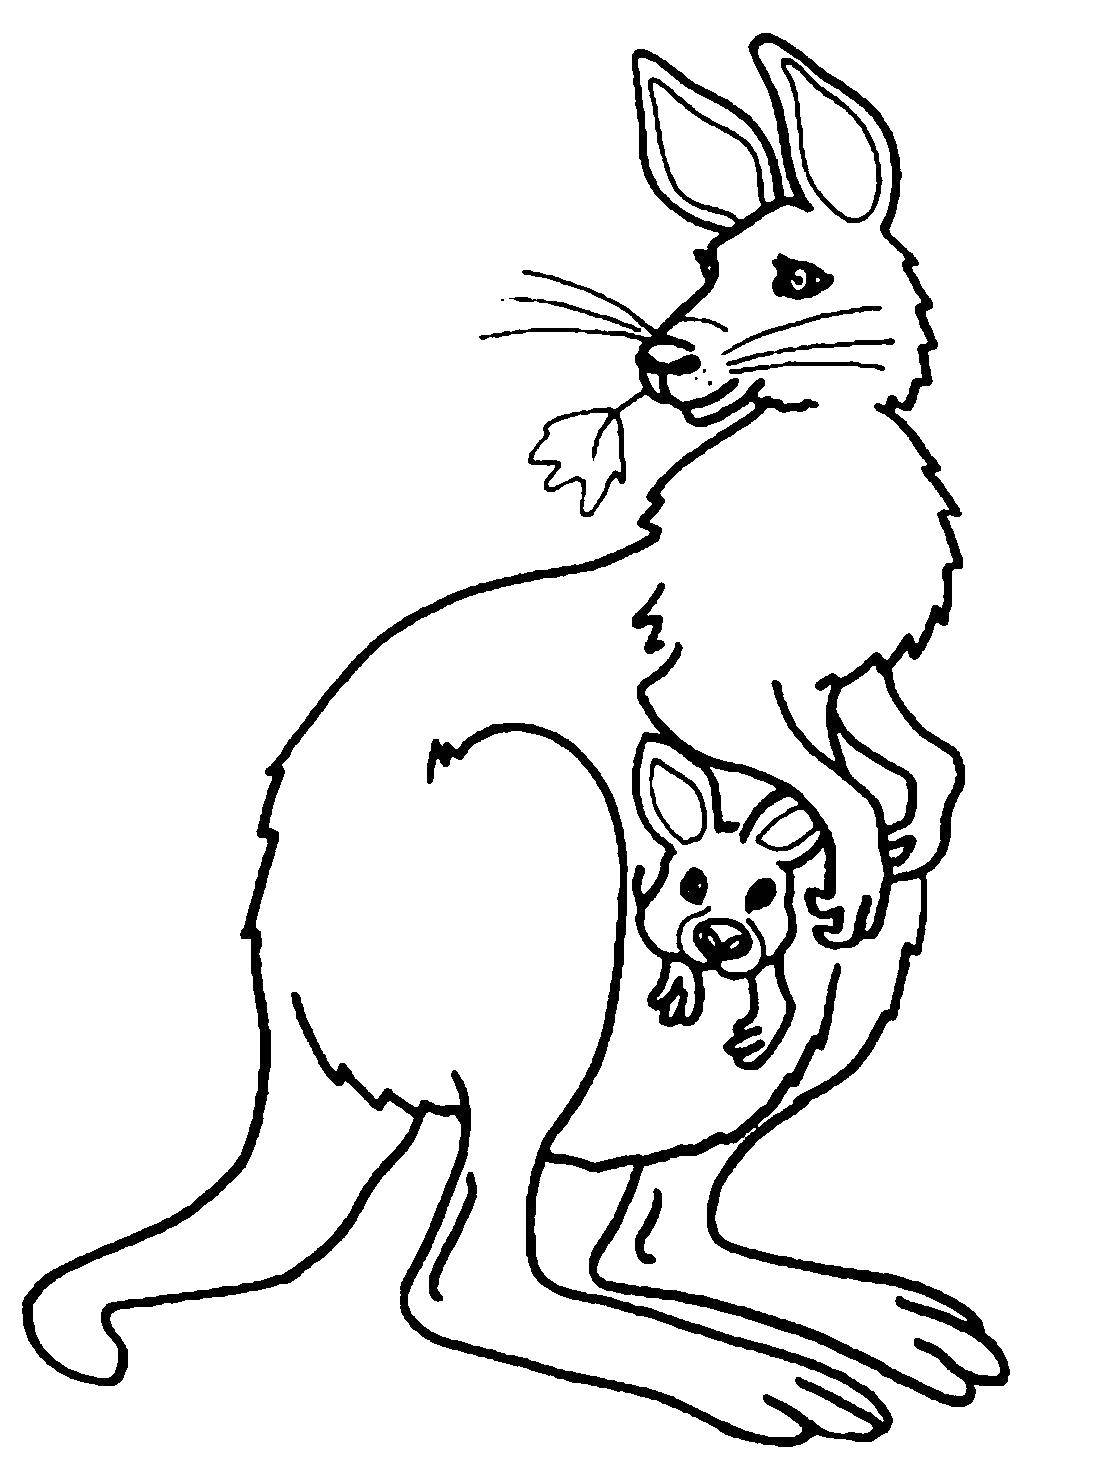 Coloring Kaguru. Category Animals. Tags:  kangaroo, animals, pocket.